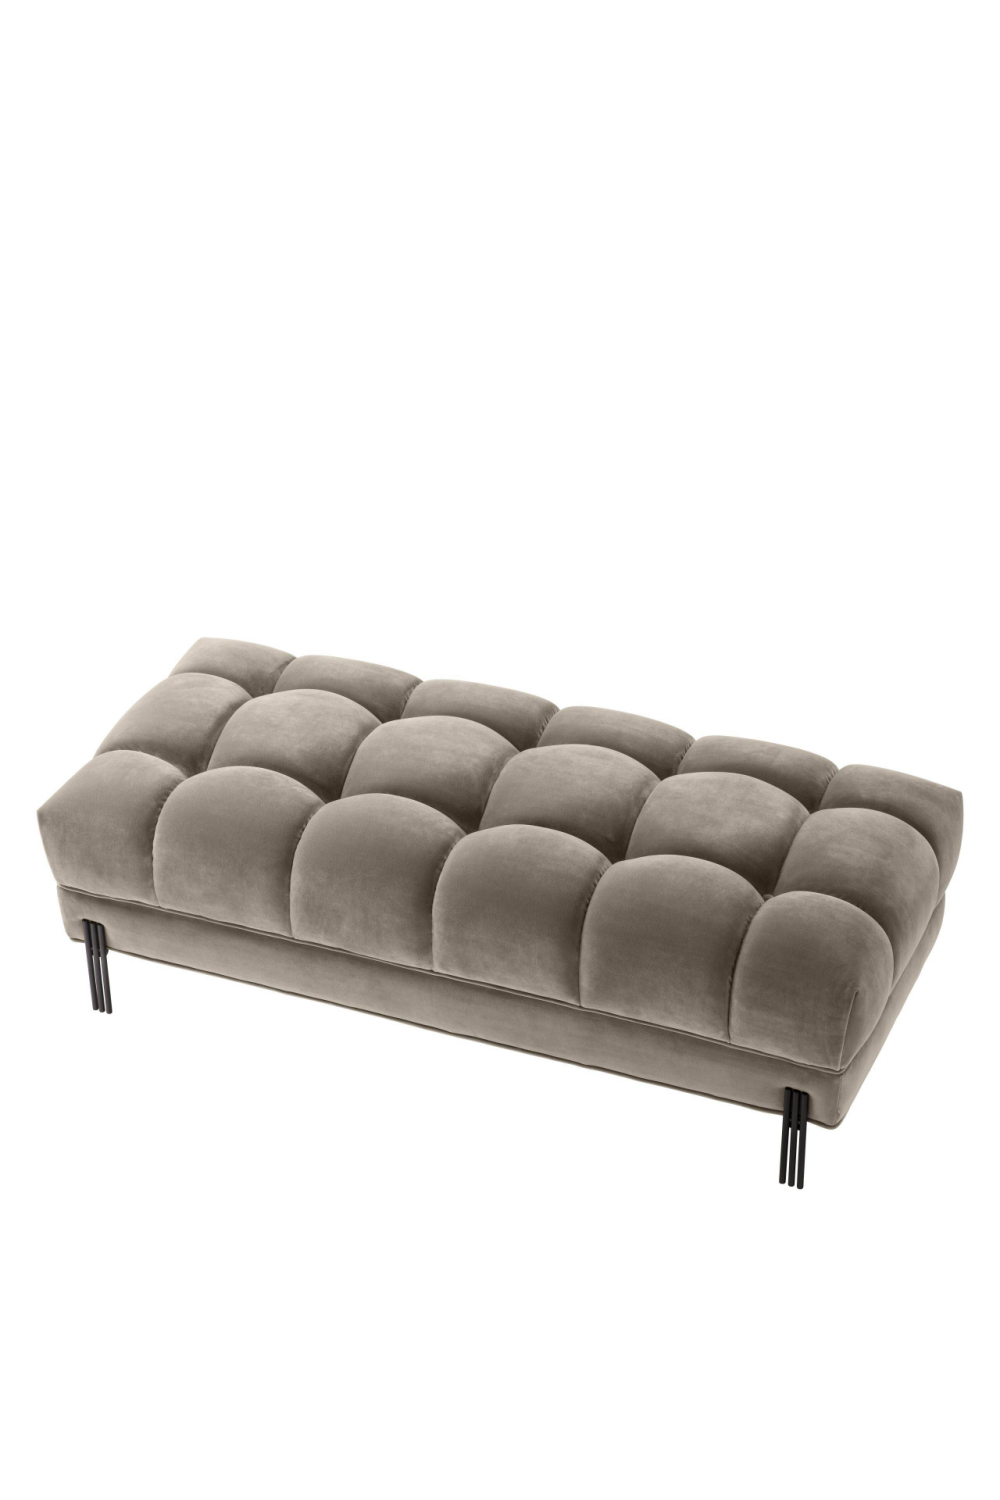 Greige Tufted Upholstered Bench | Eichholtz Sienna | OROA